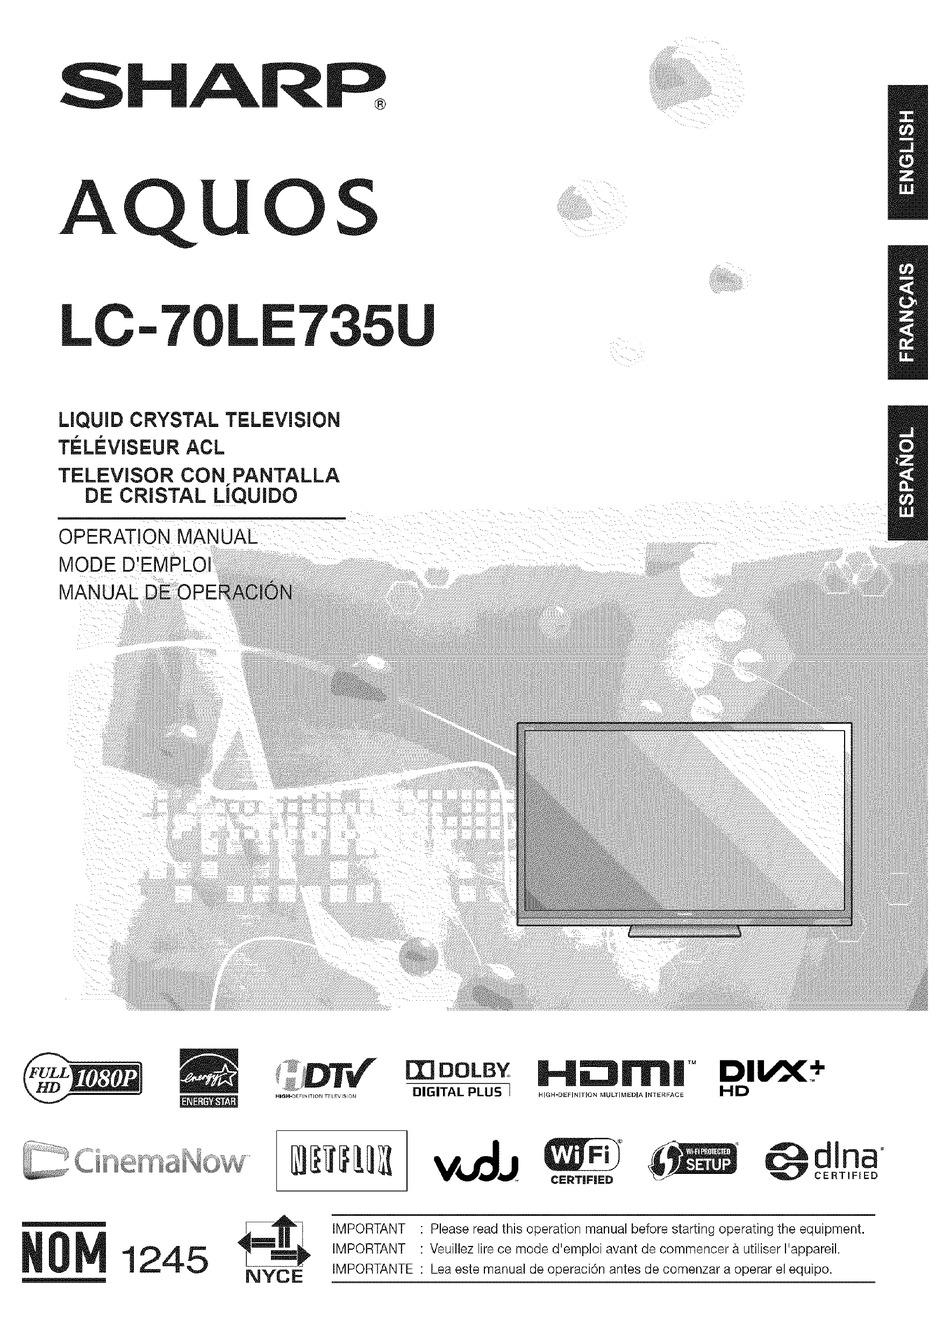 SHARP AQUOS LC-70LE735U OPERATION MANUAL Pdf Download | ManualsLib